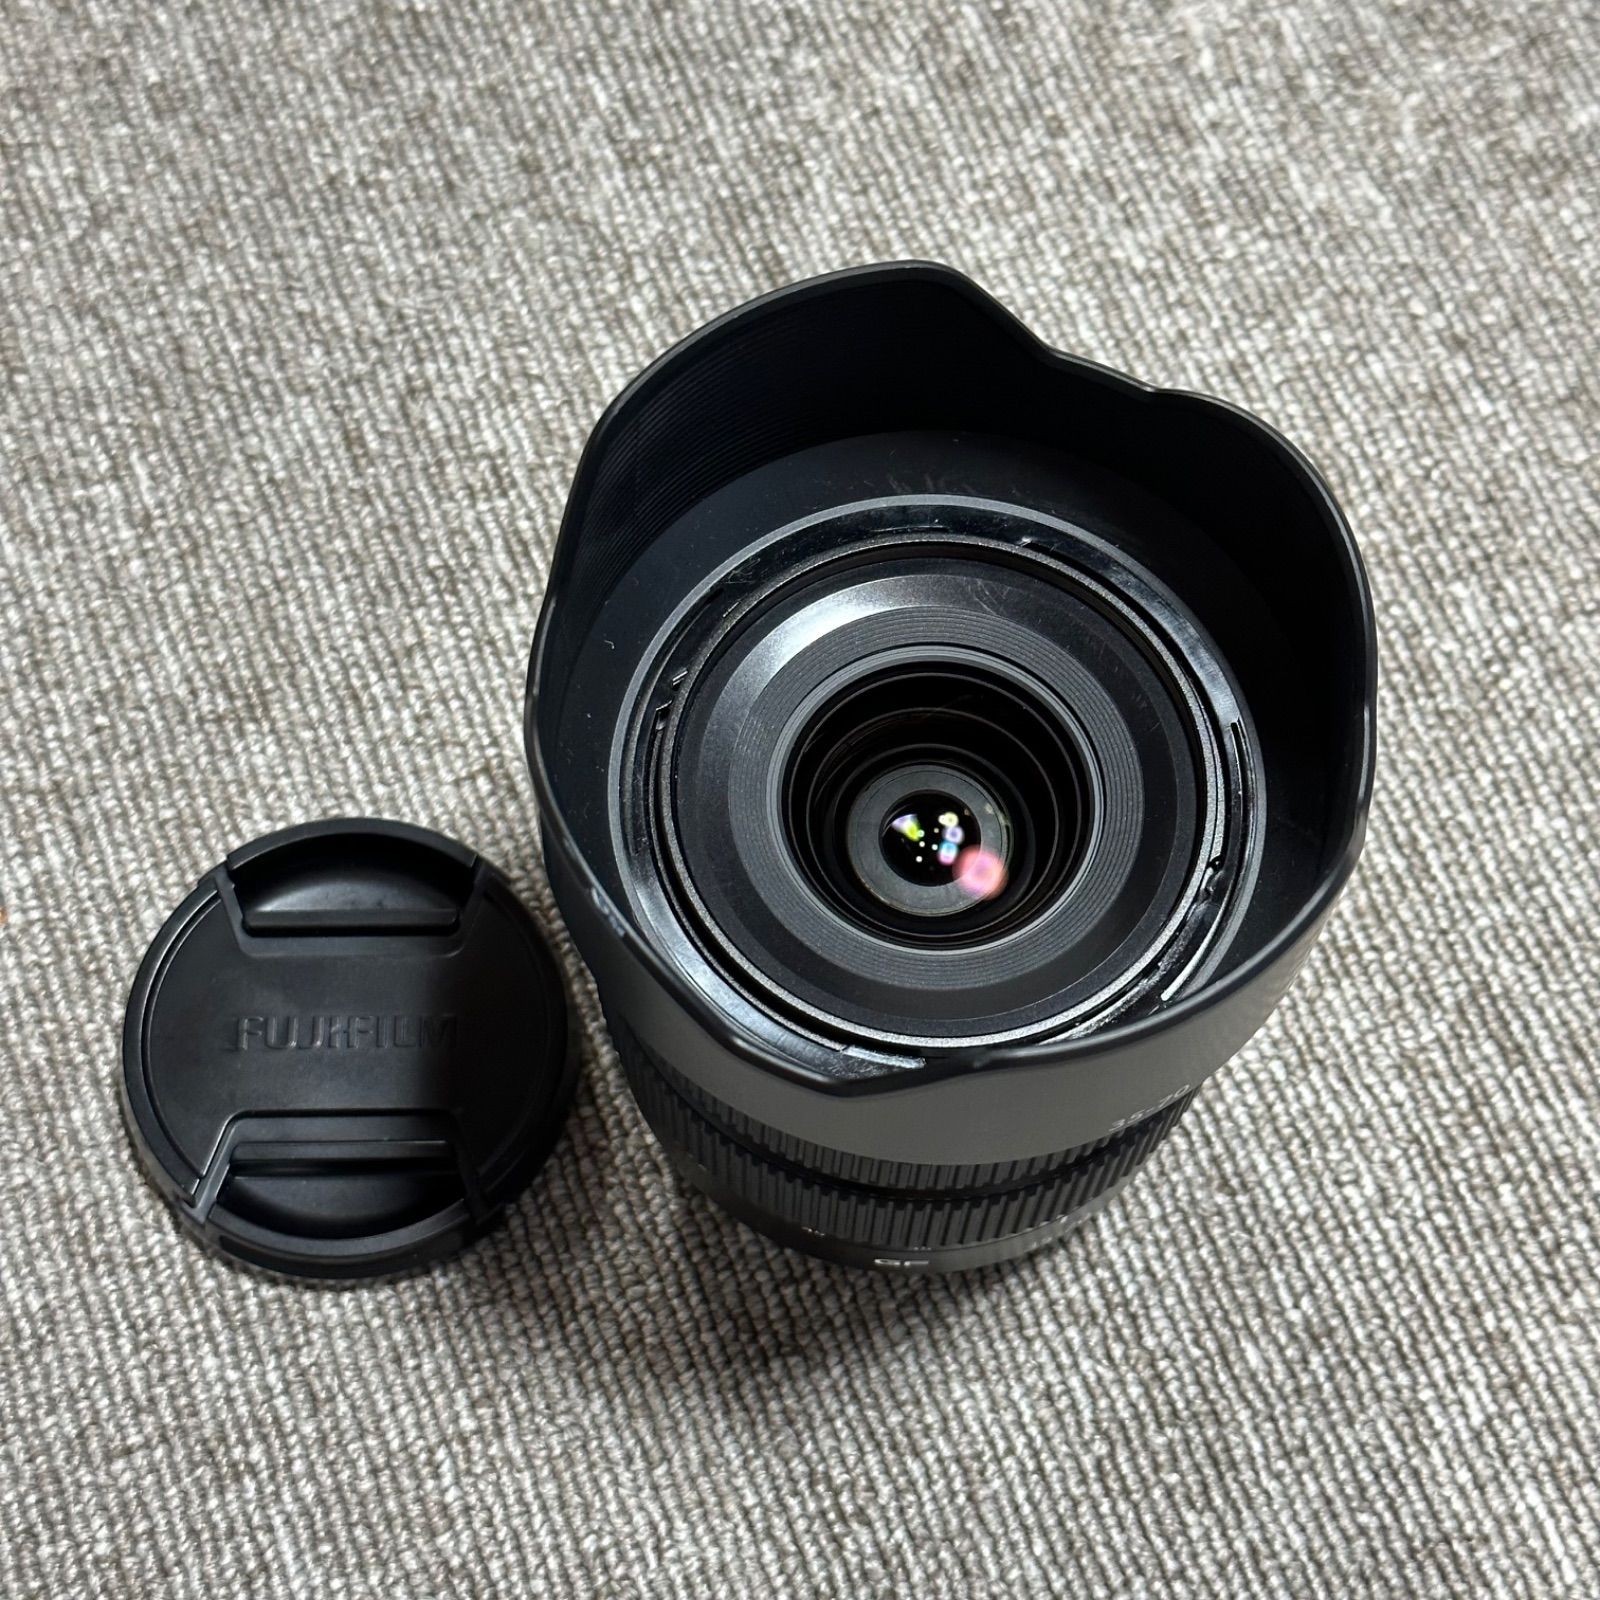 FUJIFILM GF35-70mm F4.5-5.6 WRラージフォーマット 中判 中判カメラ